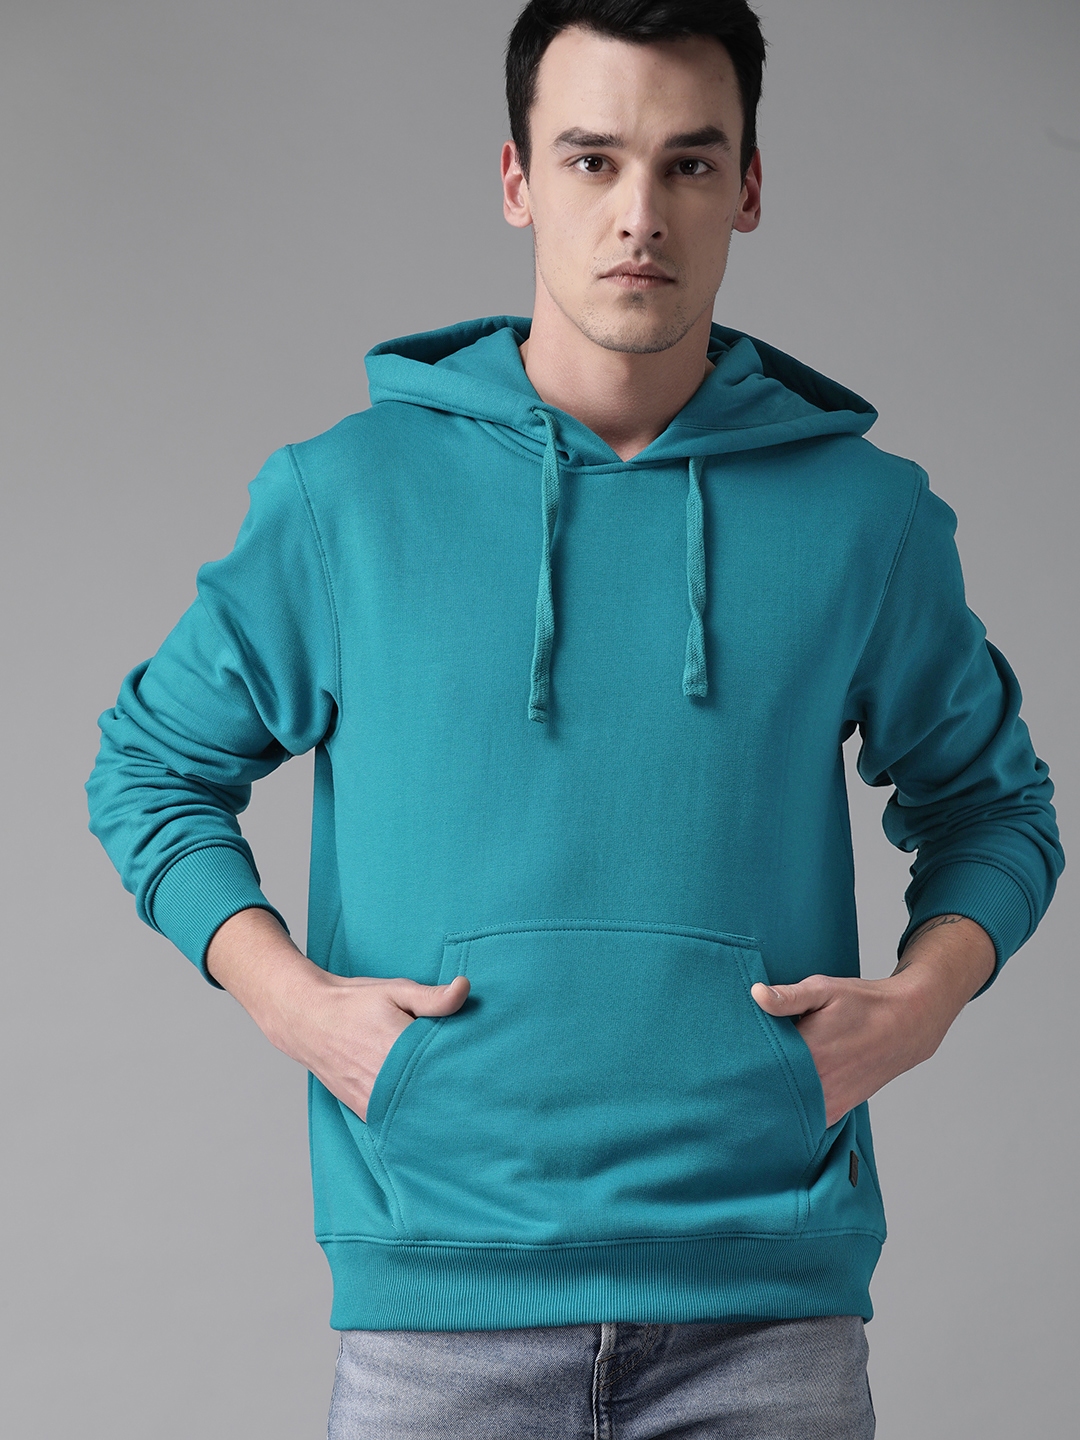 Buy The Roadster Lifestyle Co Men Blue Solid Hooded Sweatshirt ...